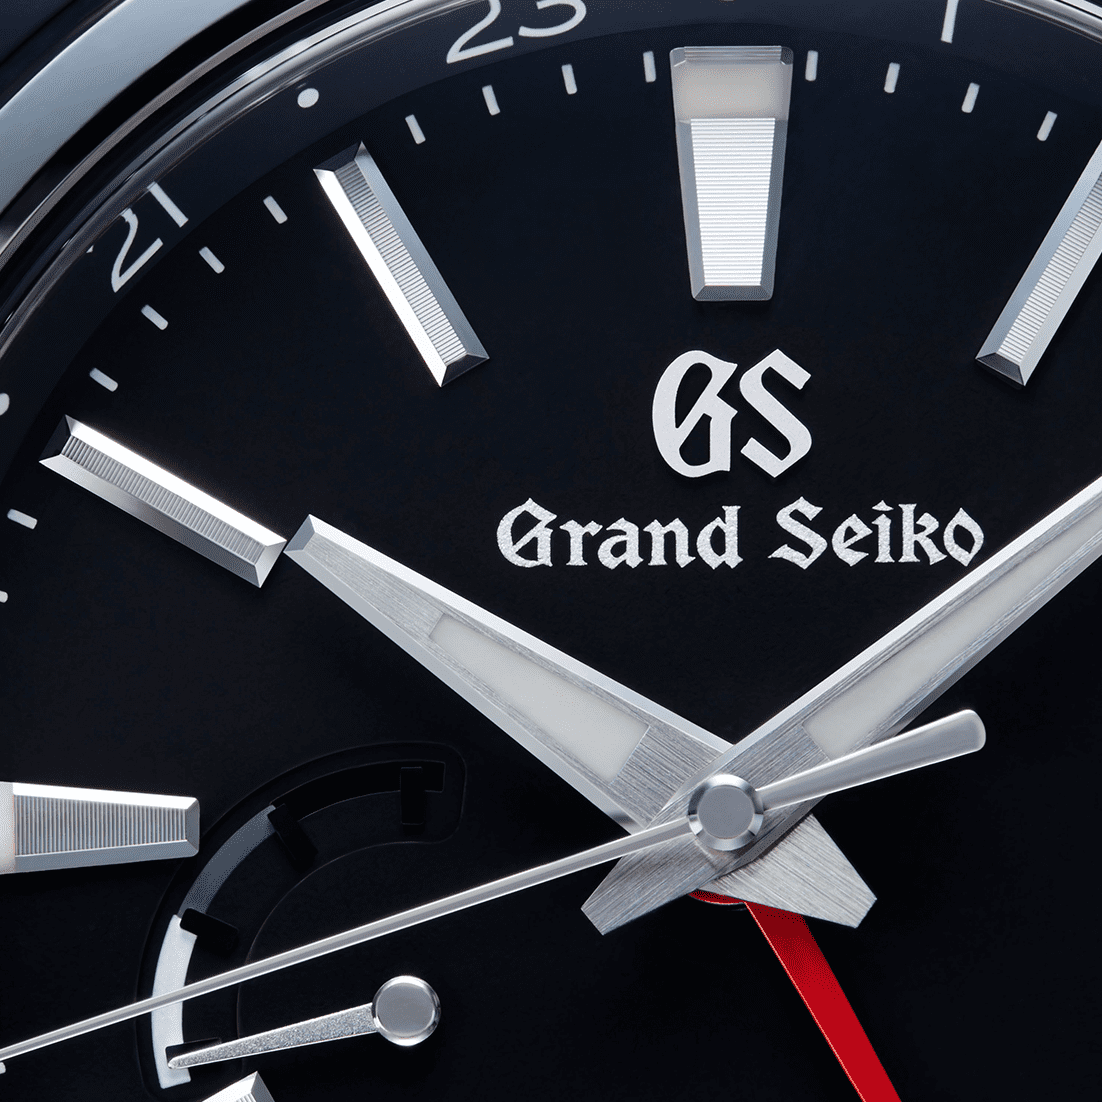 Grand Seiko Sports Spring Drive GMT Watch